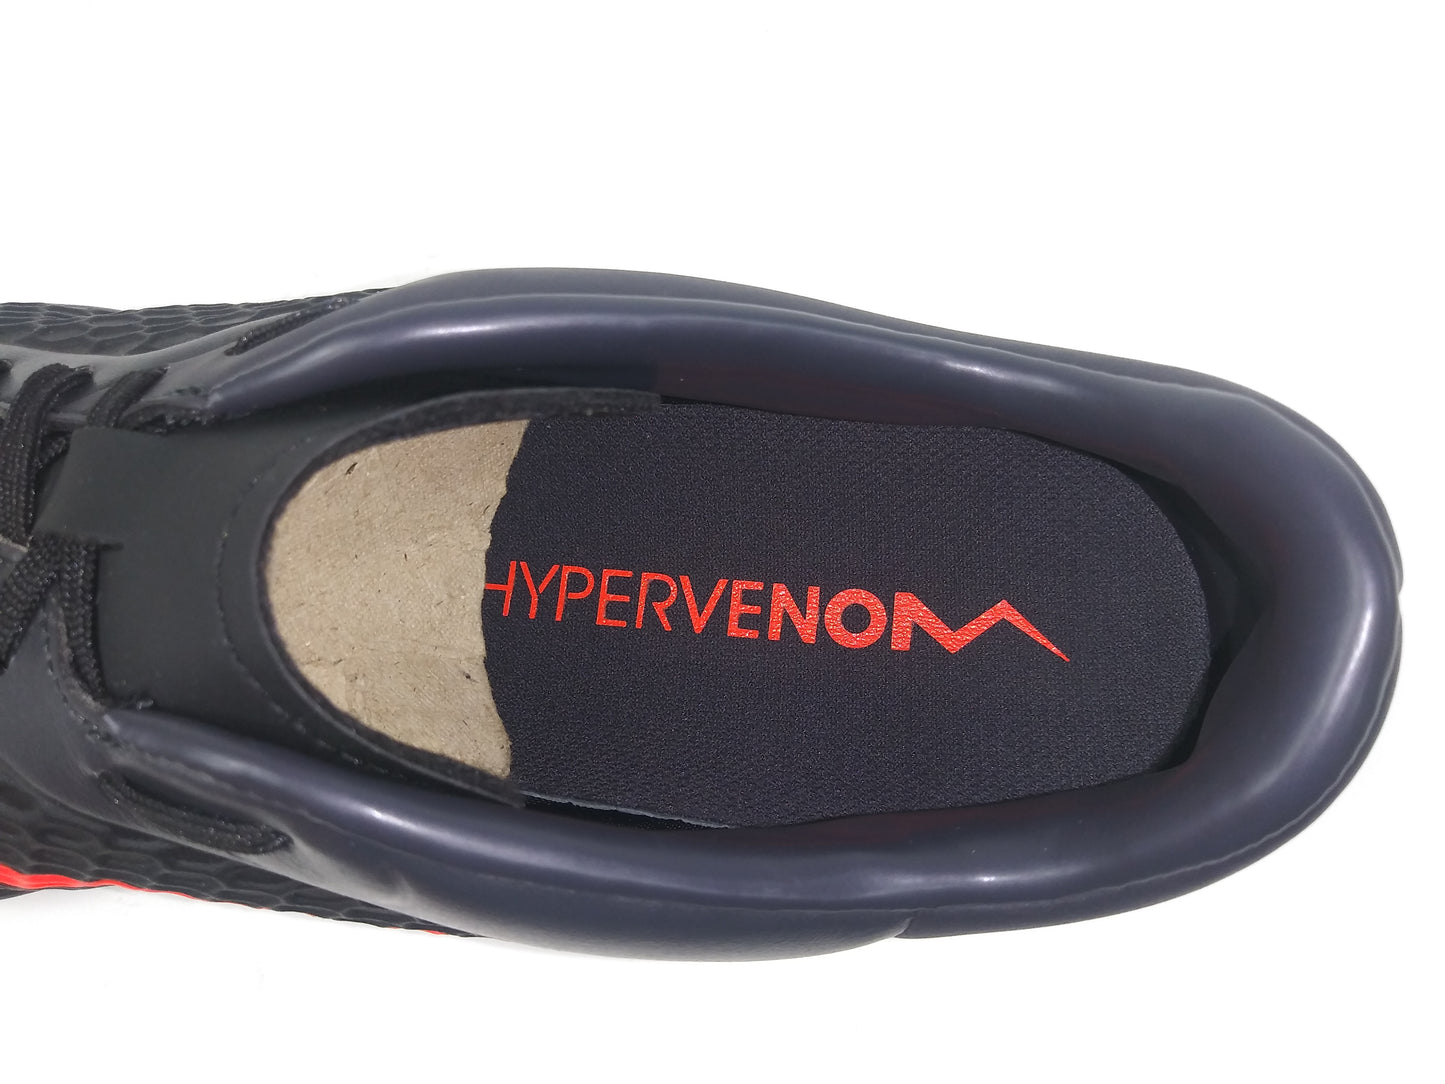 Nike Hypervenom Phelon IC Indoor Shoes Black Orange